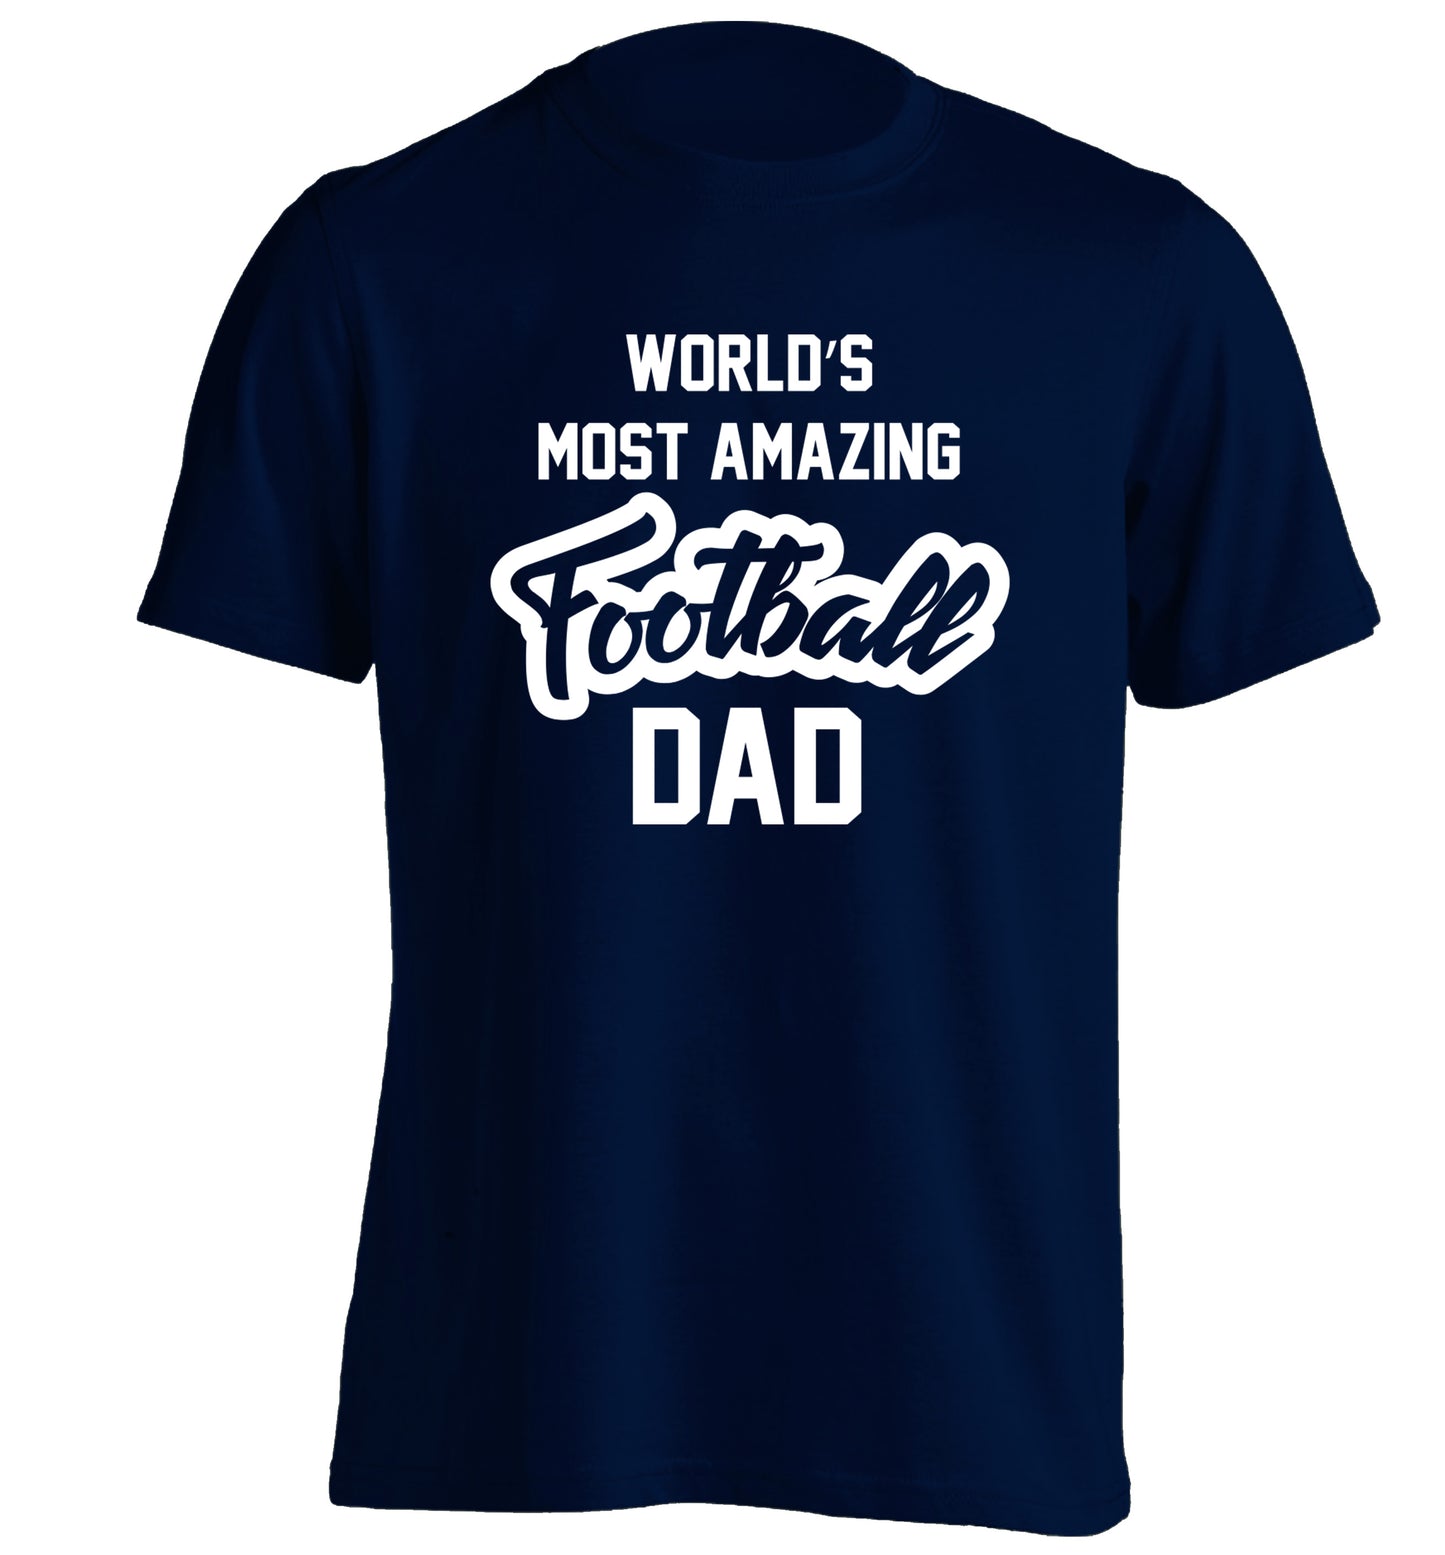 Worlds most amazing football dad adults unisexnavy Tshirt 2XL